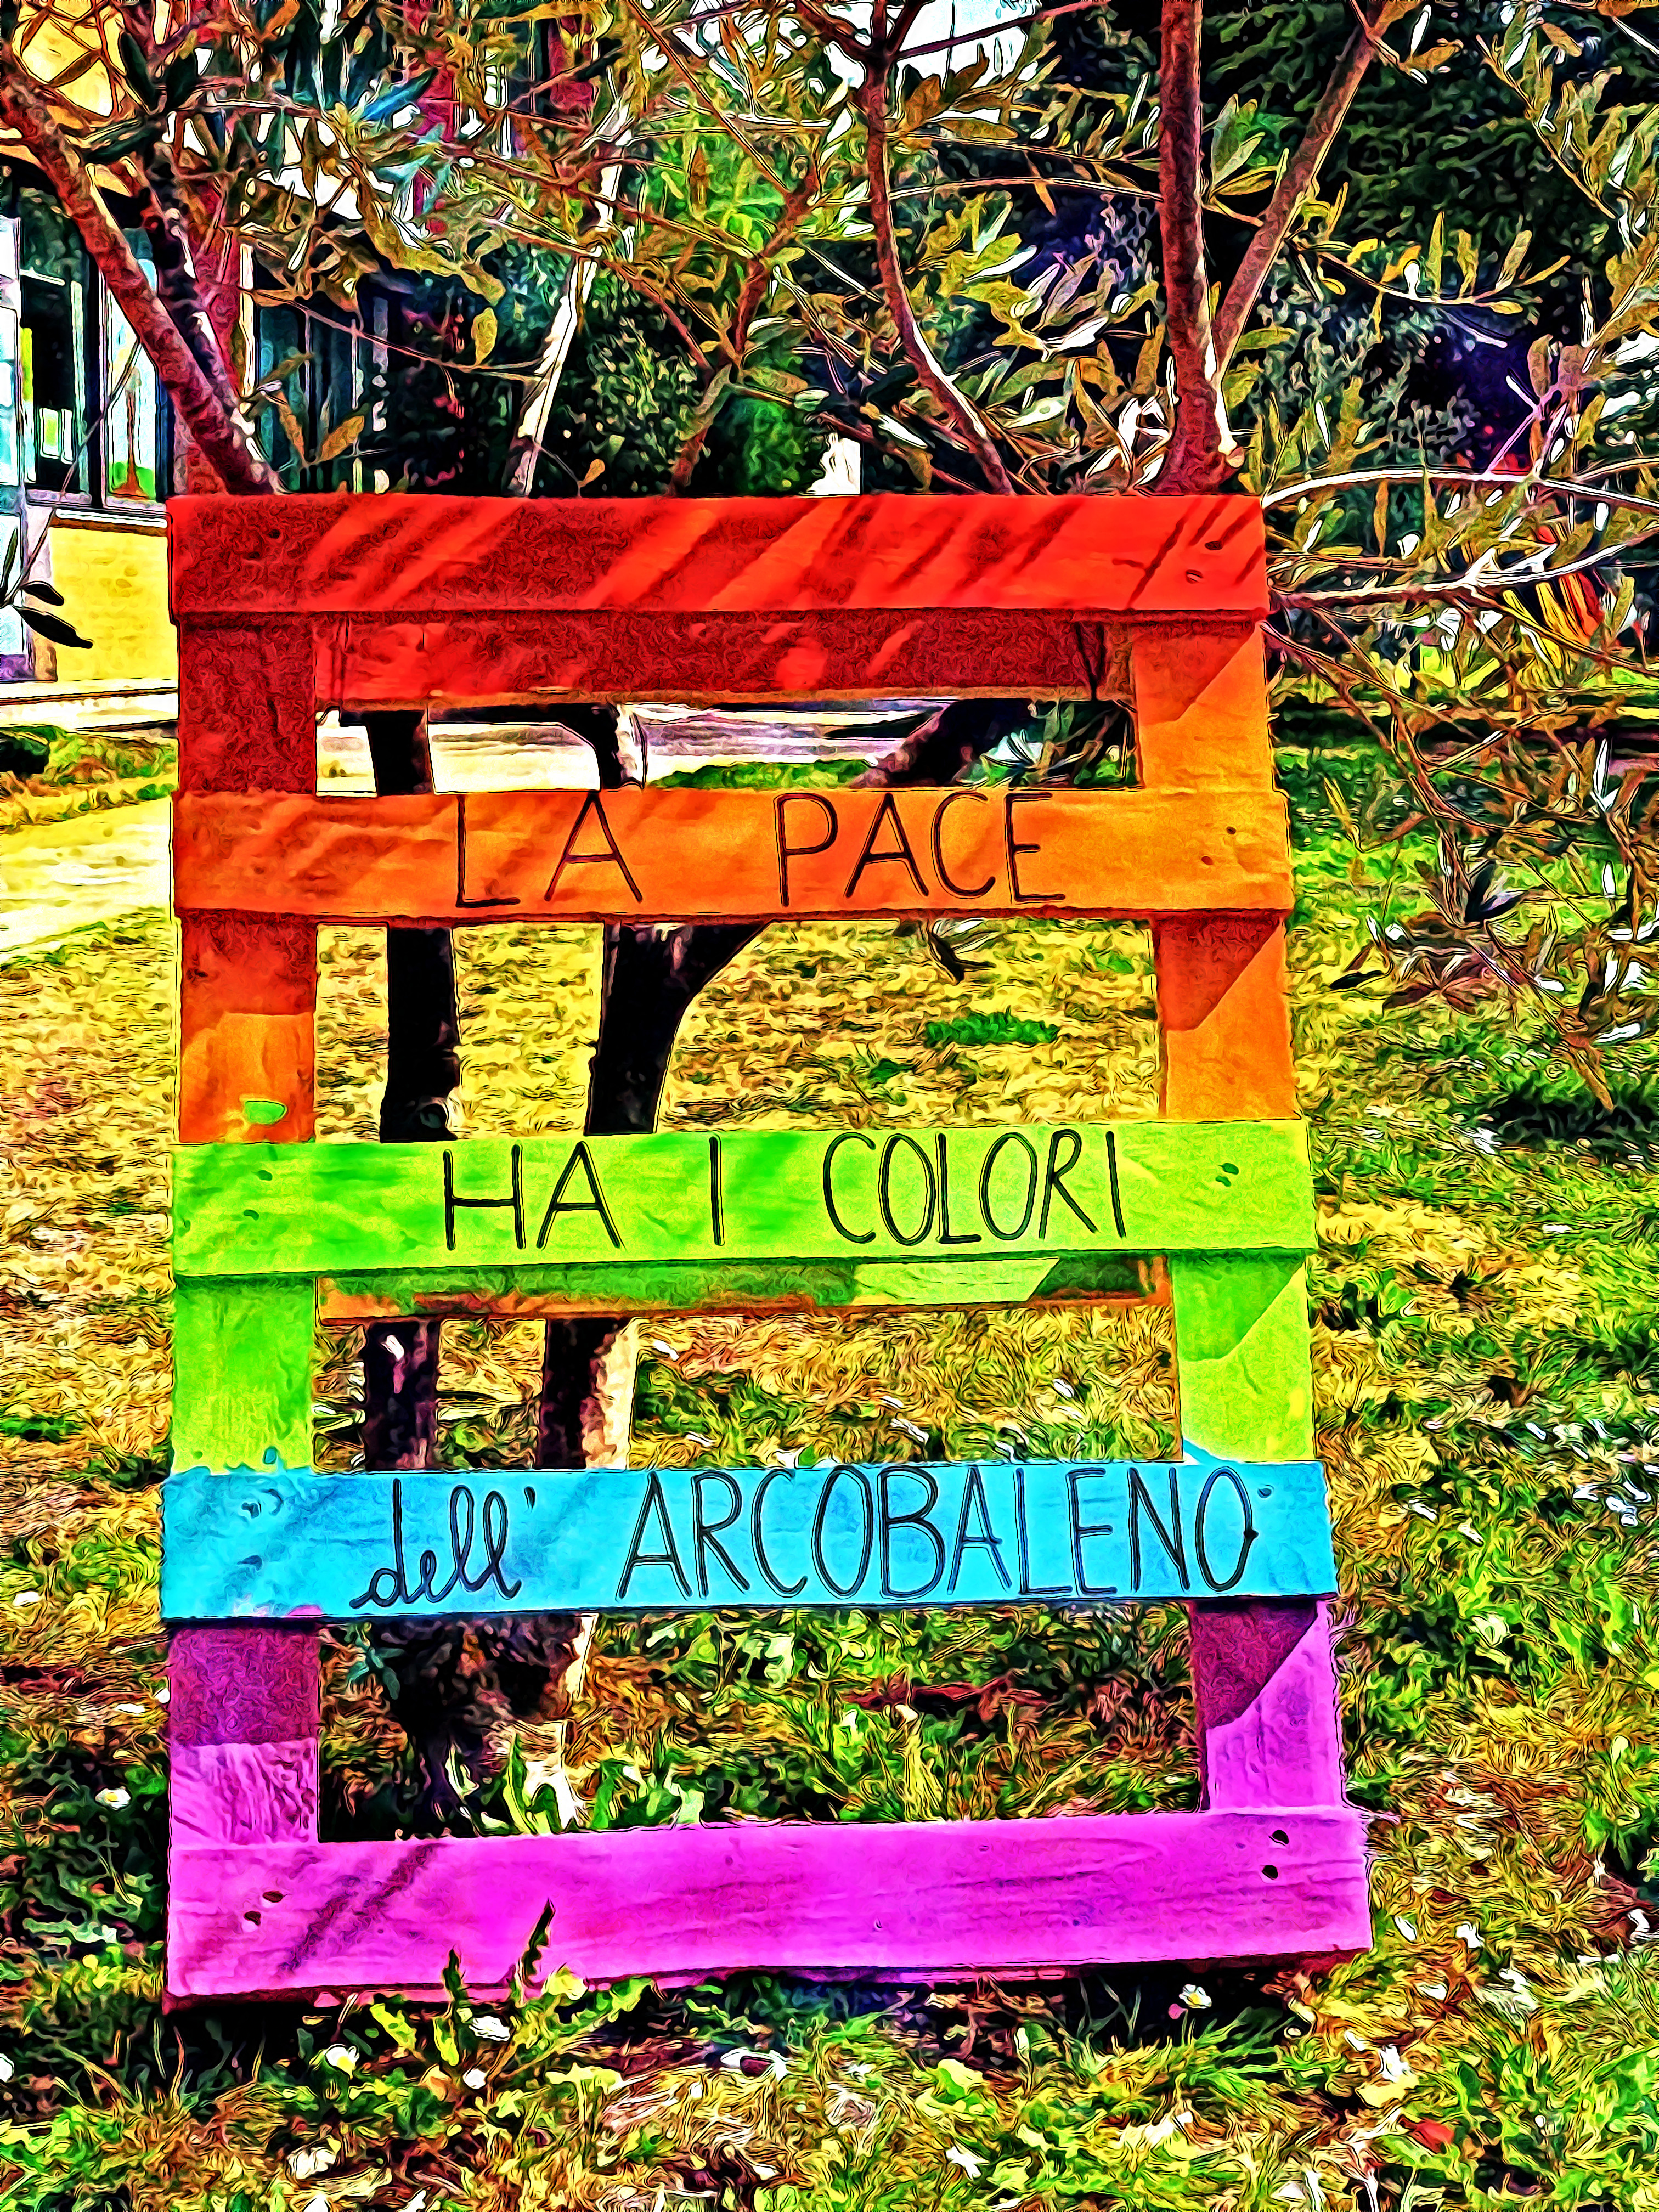 Peace has rainbow colors (Francesco Galgani's art, March 29, 2022)